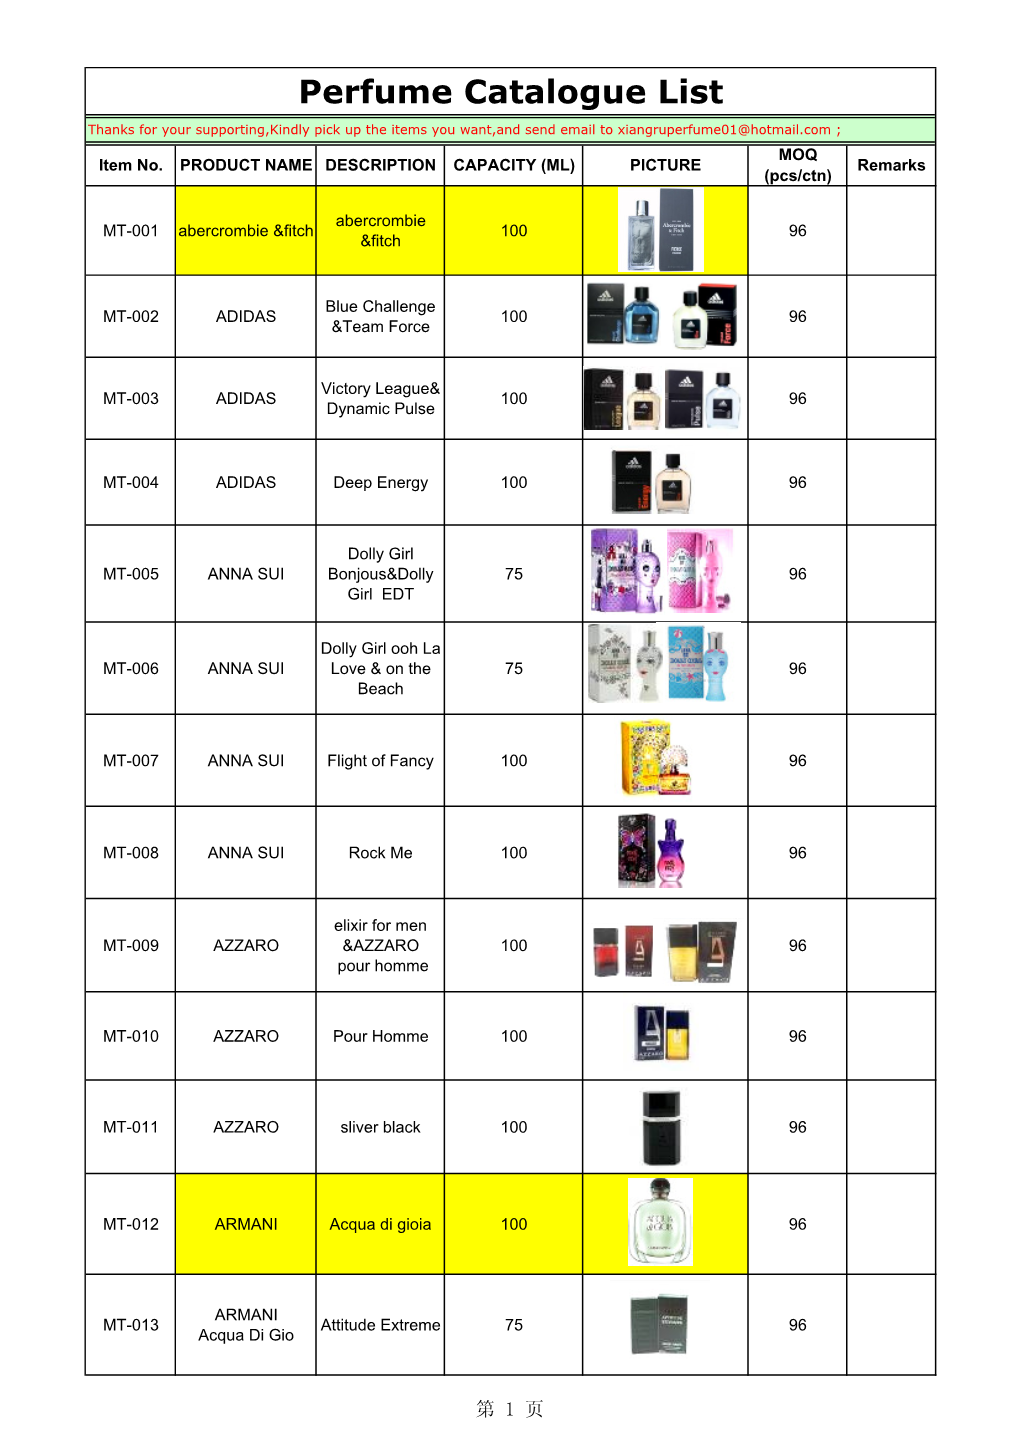 Perfume Full Catalogue List-MT Co.Ltd